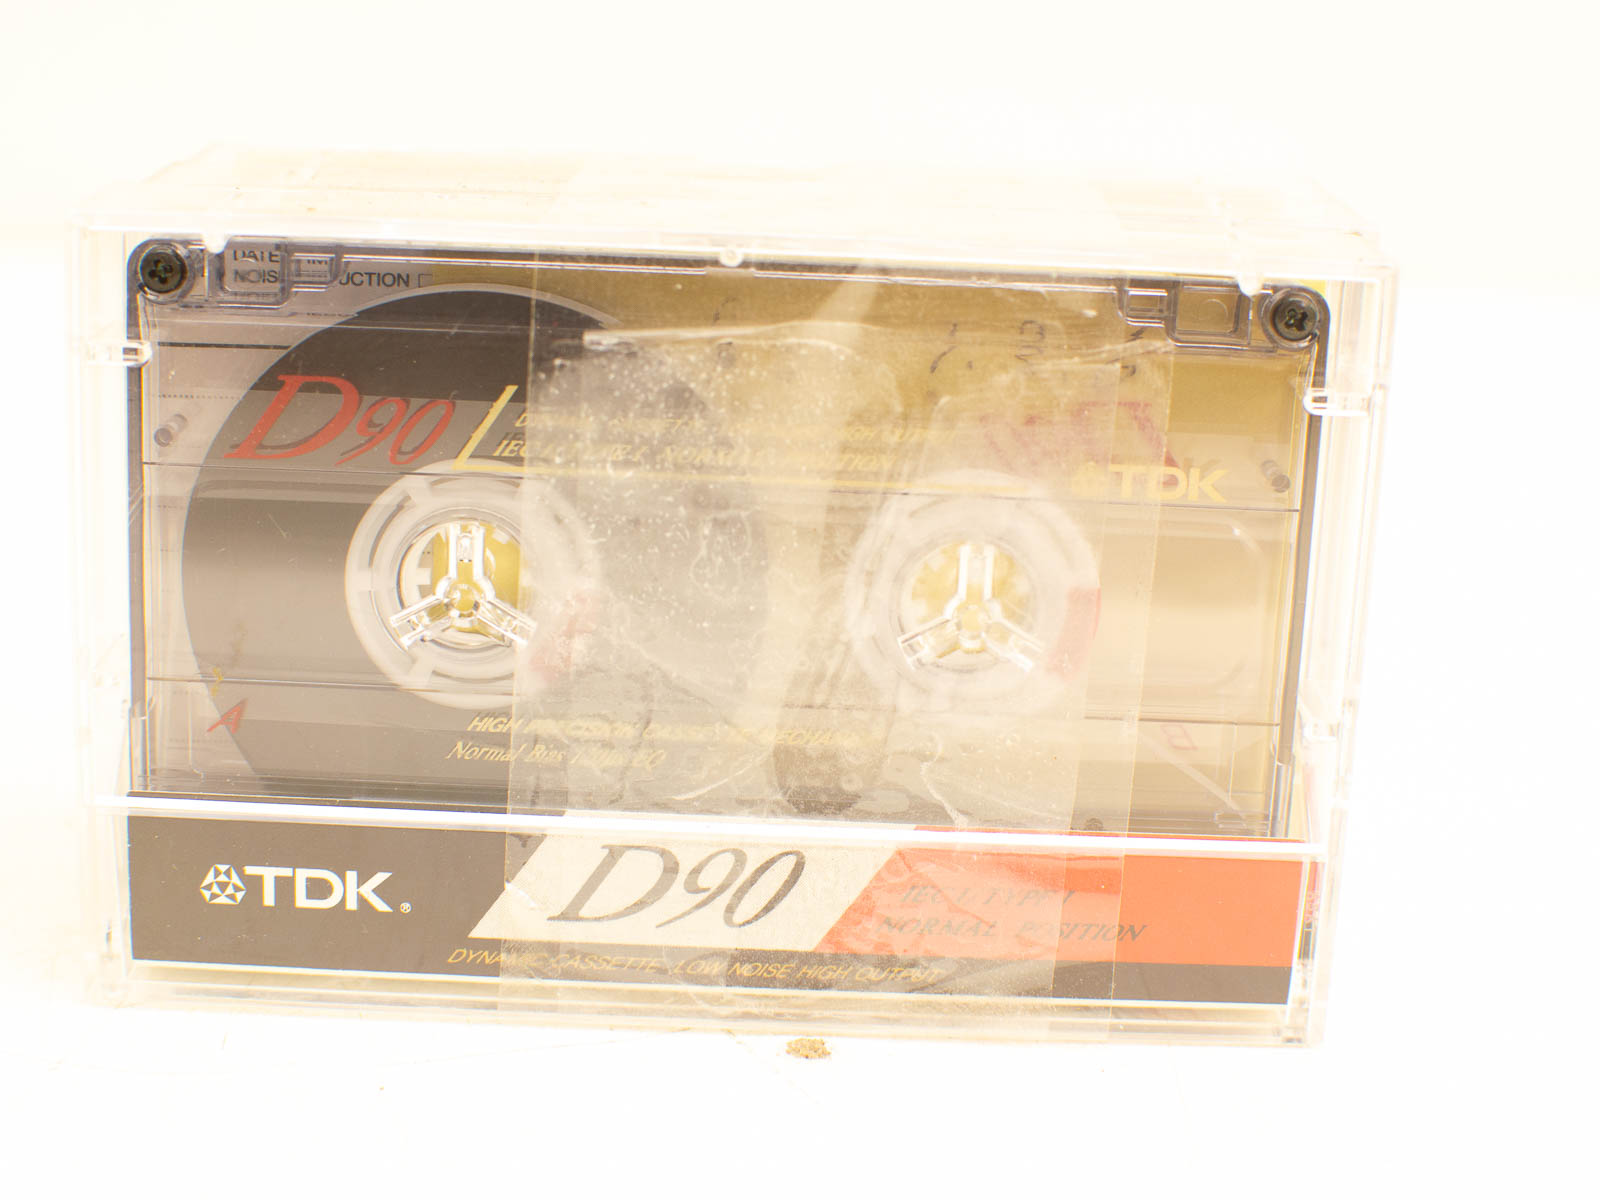 3 Tdk cassettebandjes  31387